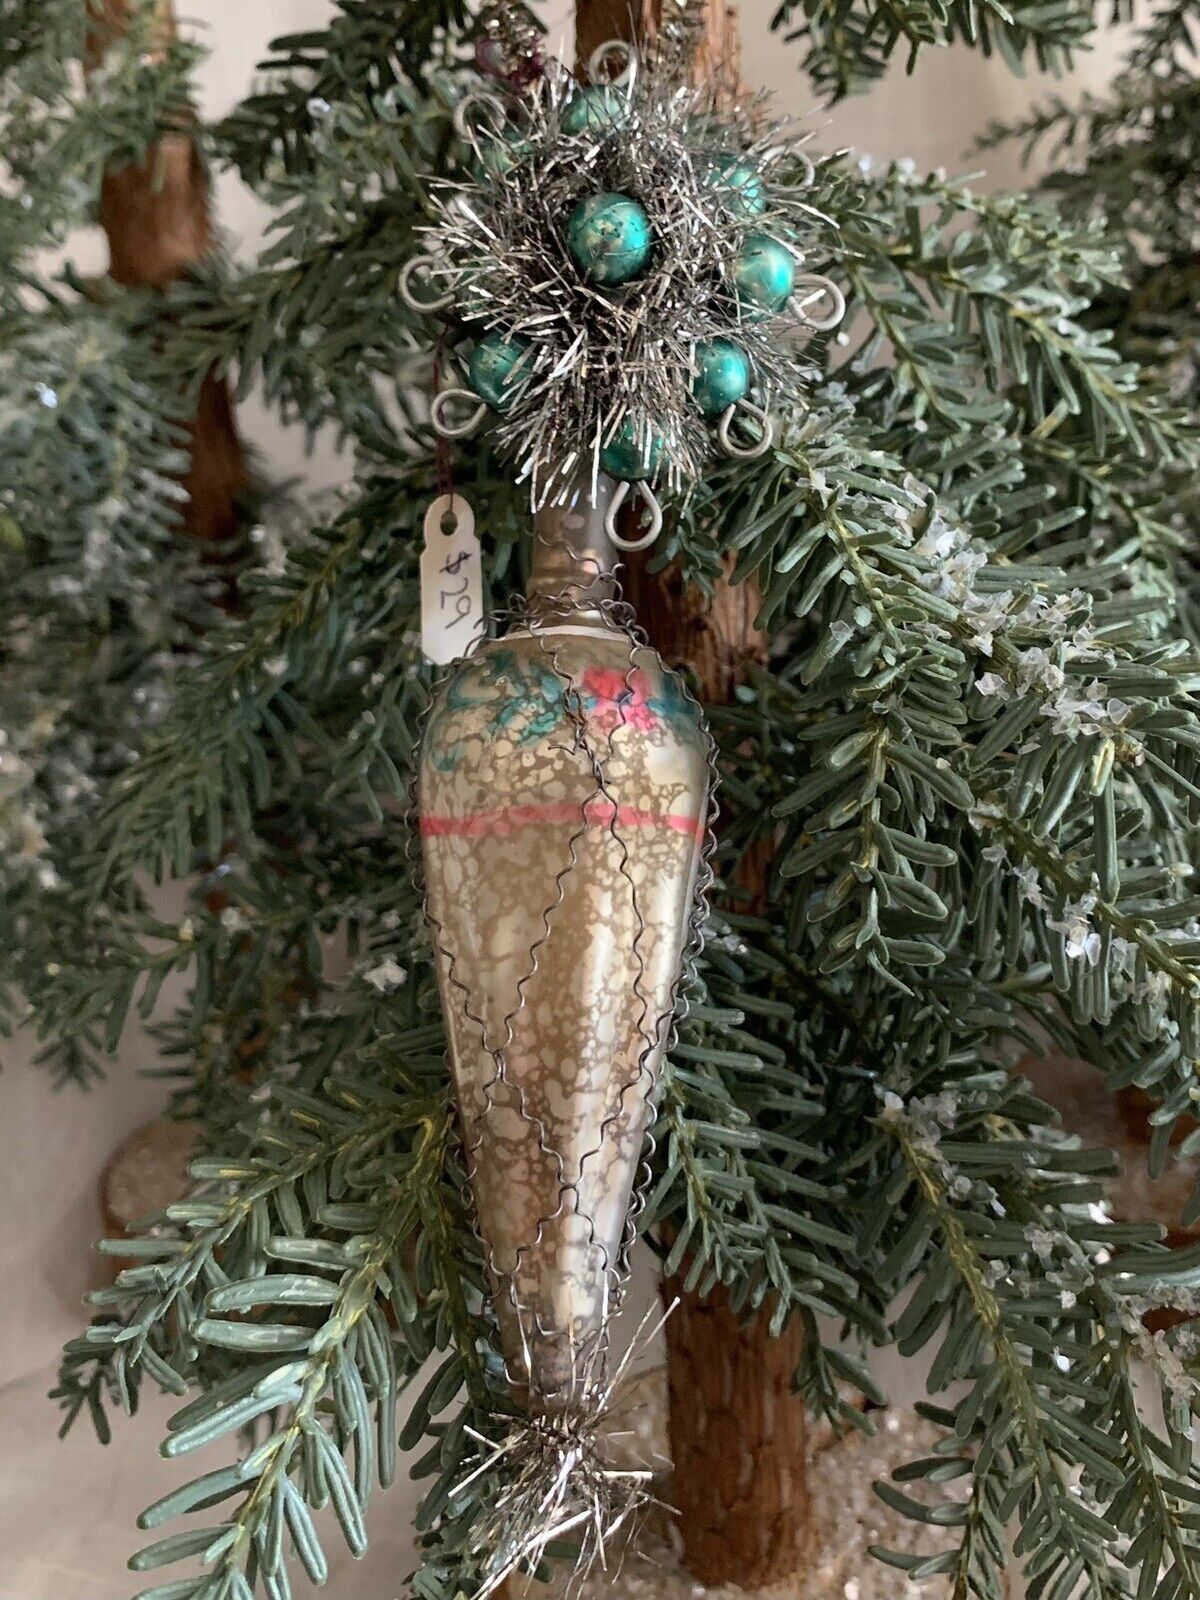 Antique/Repro Wire Wrapped Umbrella Christmas Ornament: New